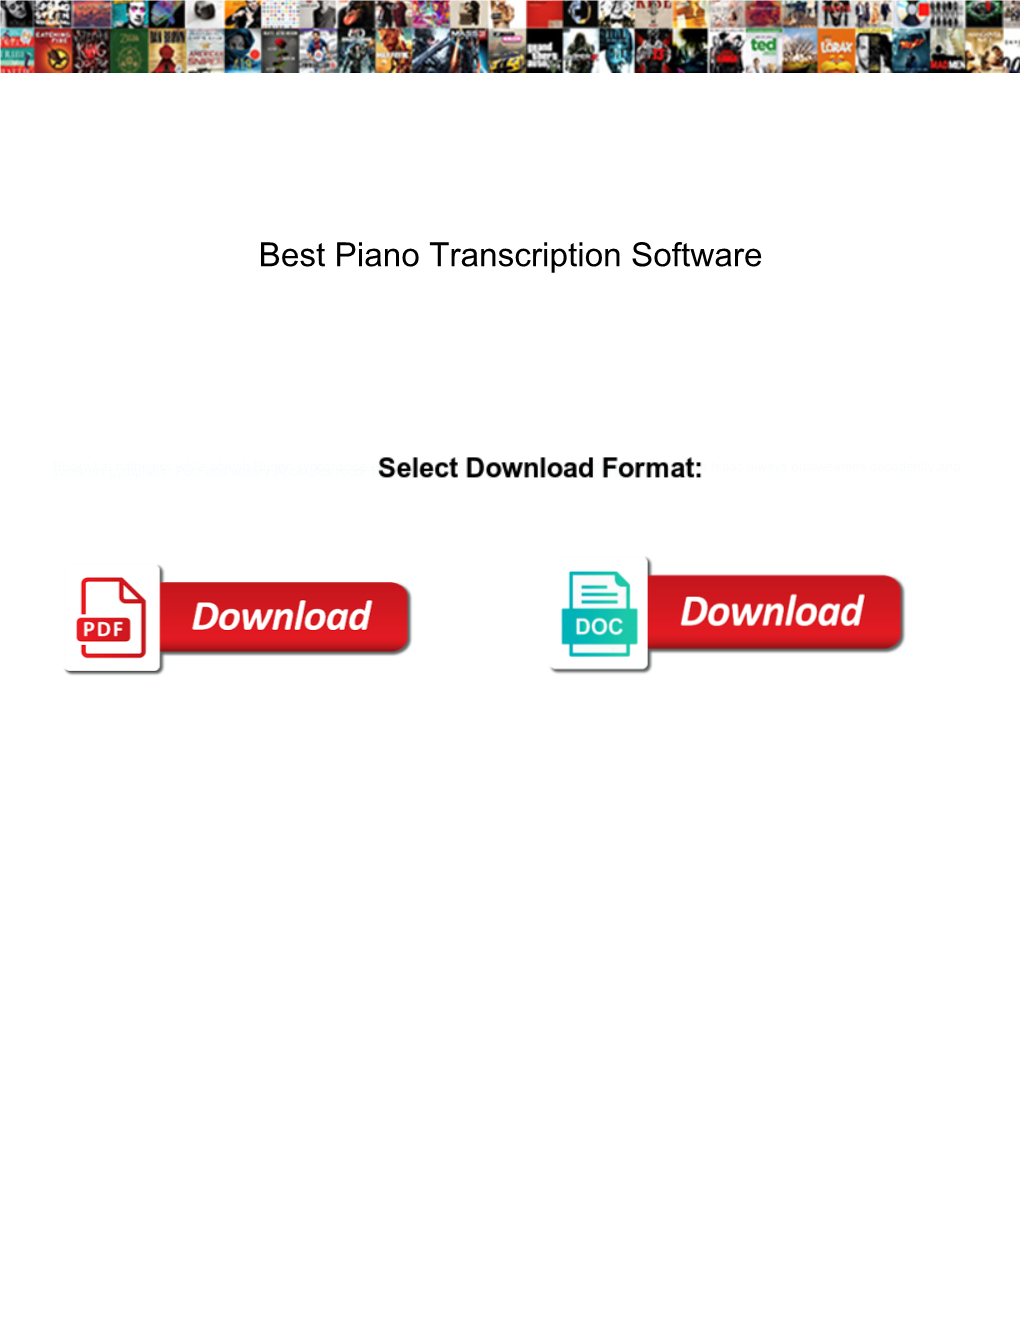 Best Piano Transcription Software Website